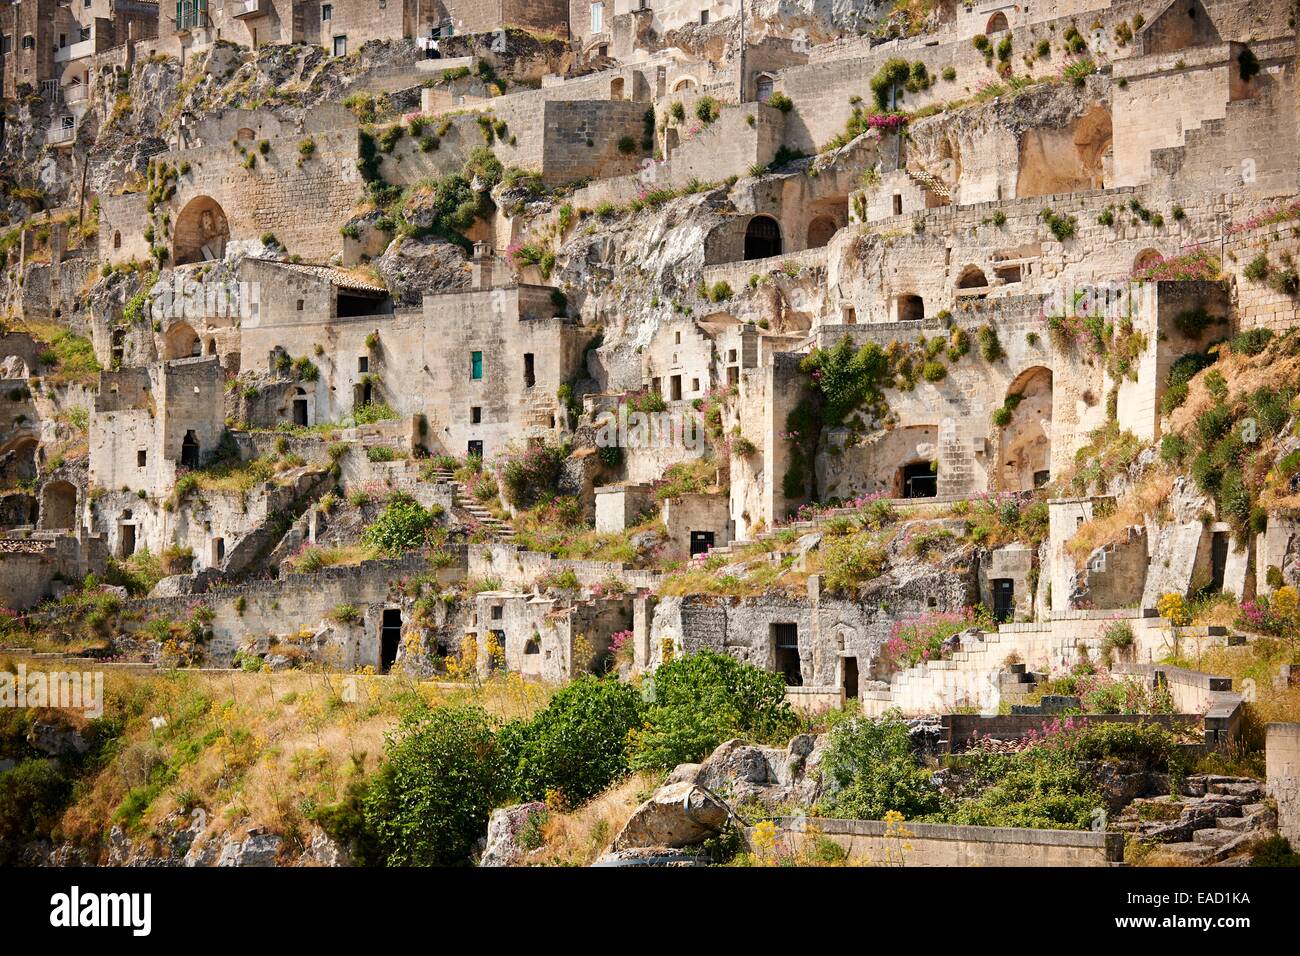 Les anciennes habitations troglodytiques, connu sous le nom de Sassi, Sassi di Matera, UNESCO World Heritage site, Matera, Basilicate, Italie Banque D'Images